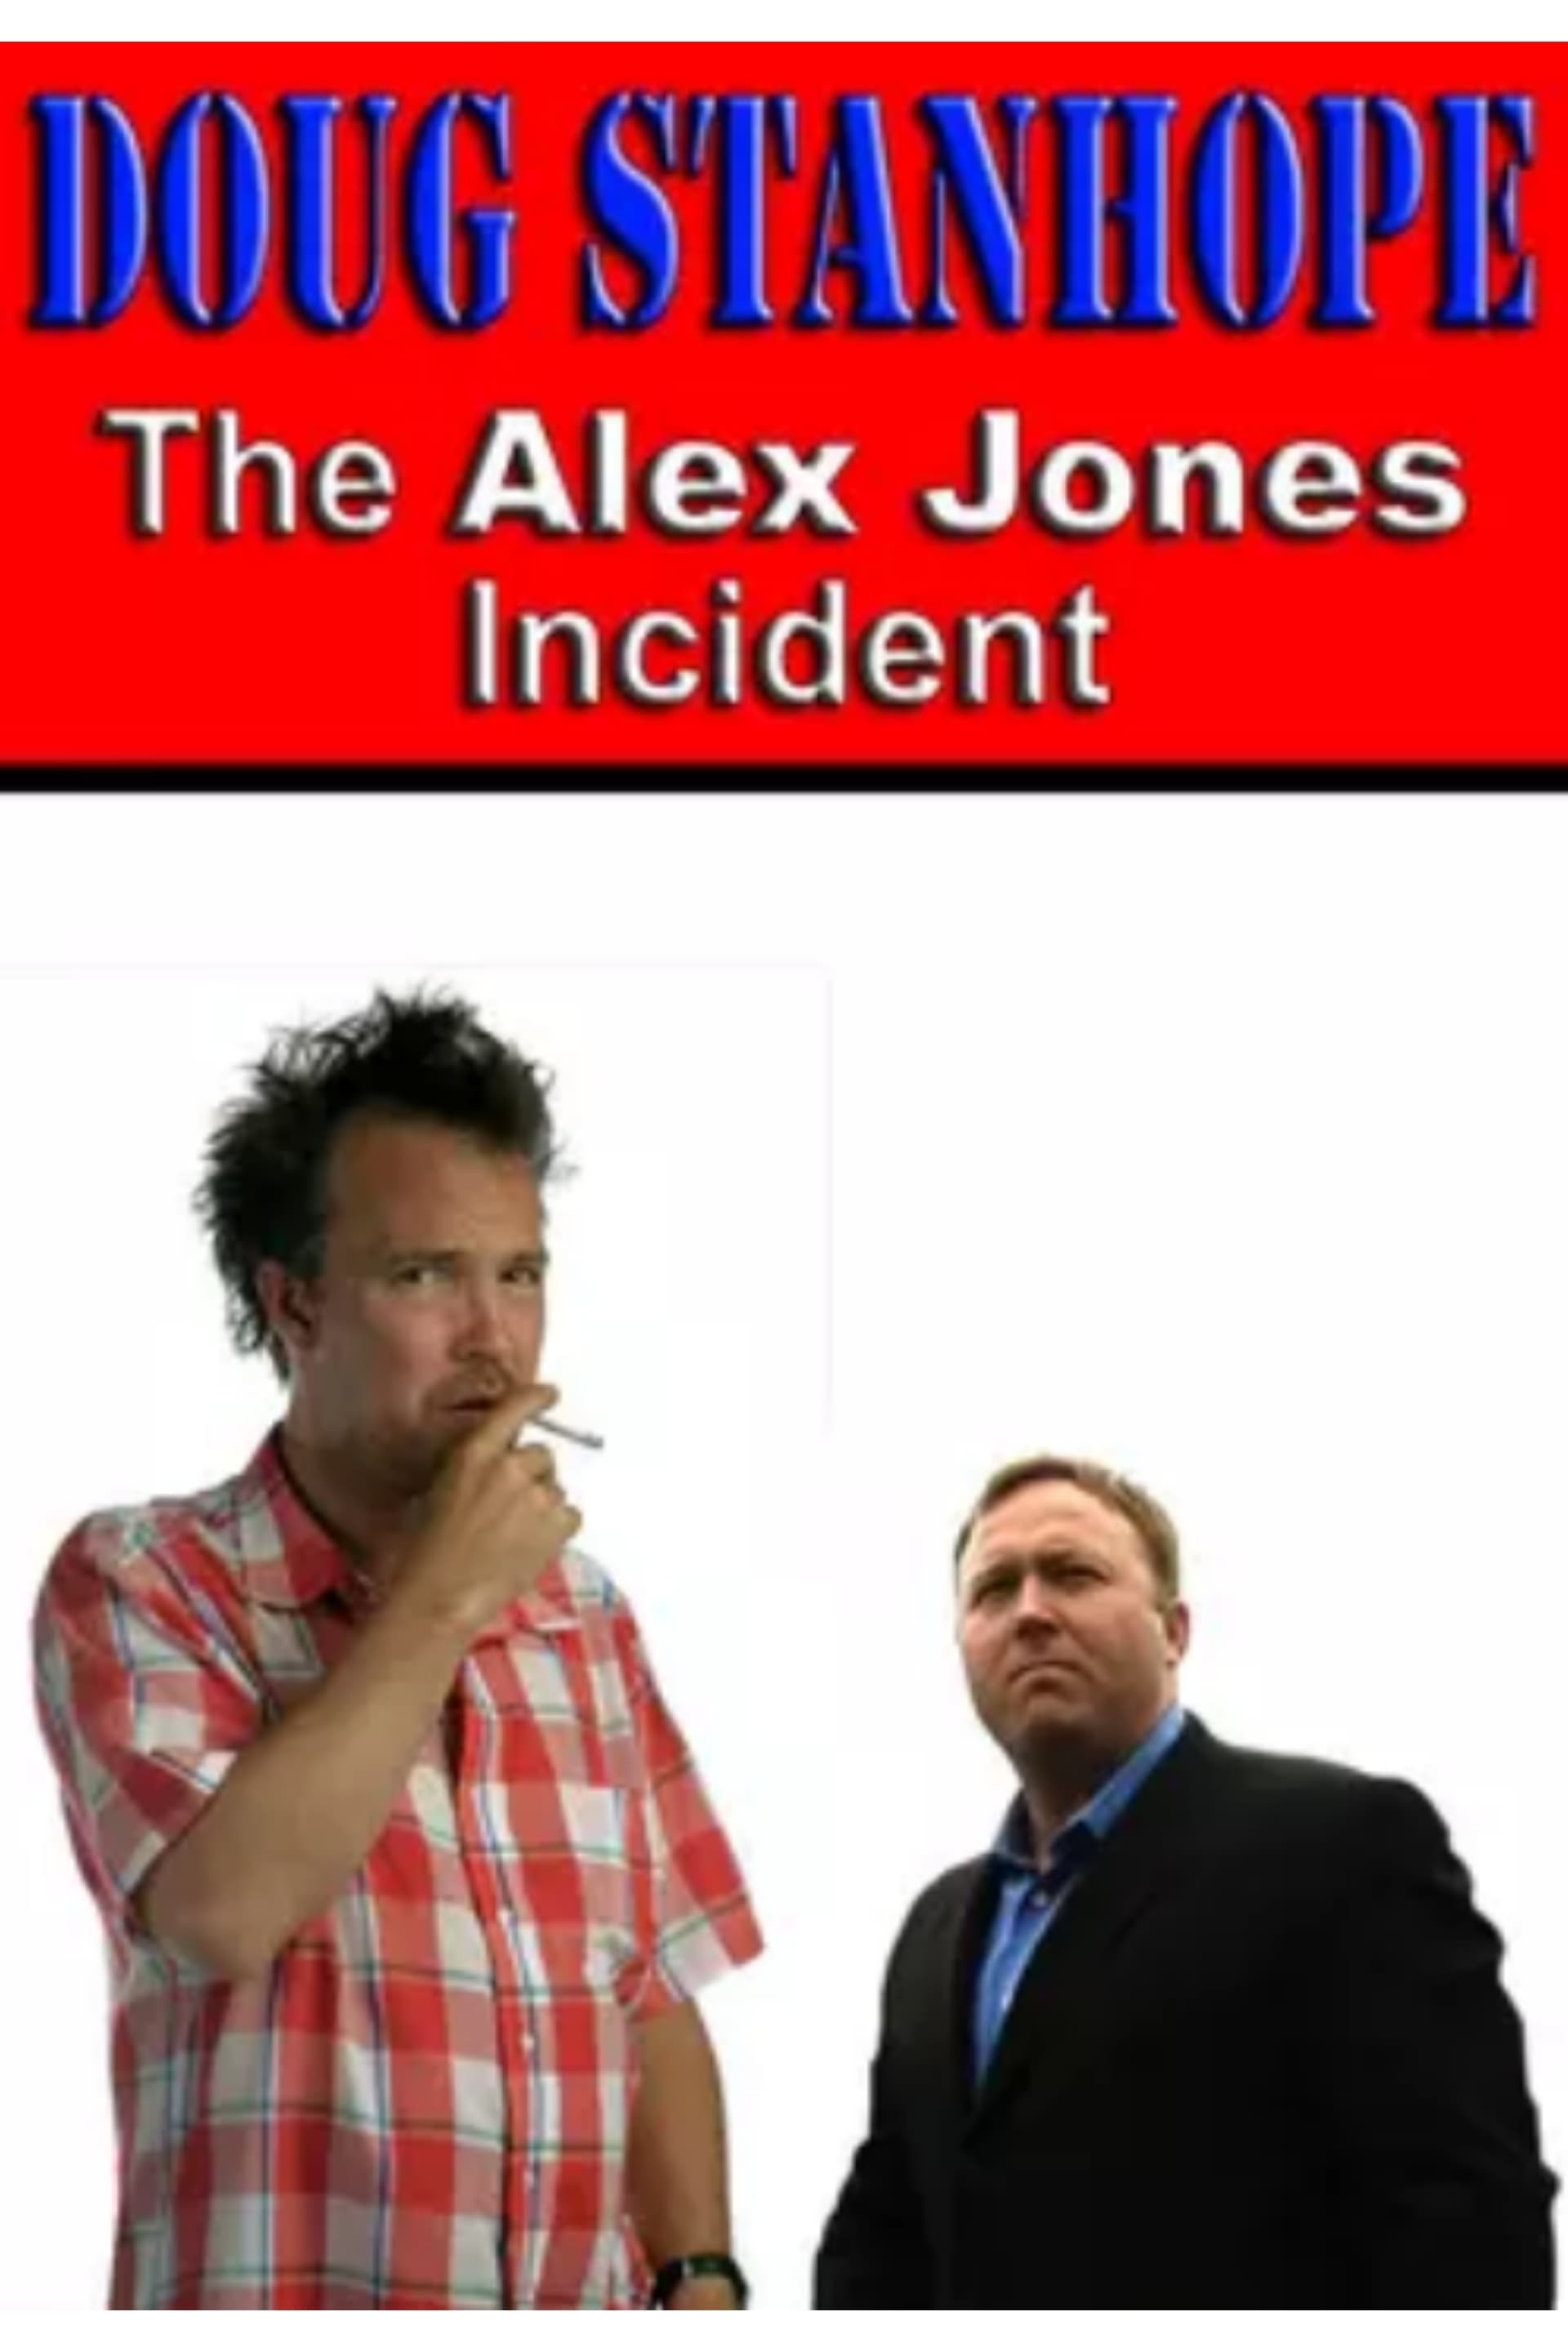 Doug Stanhope: The Alex Jones Incident